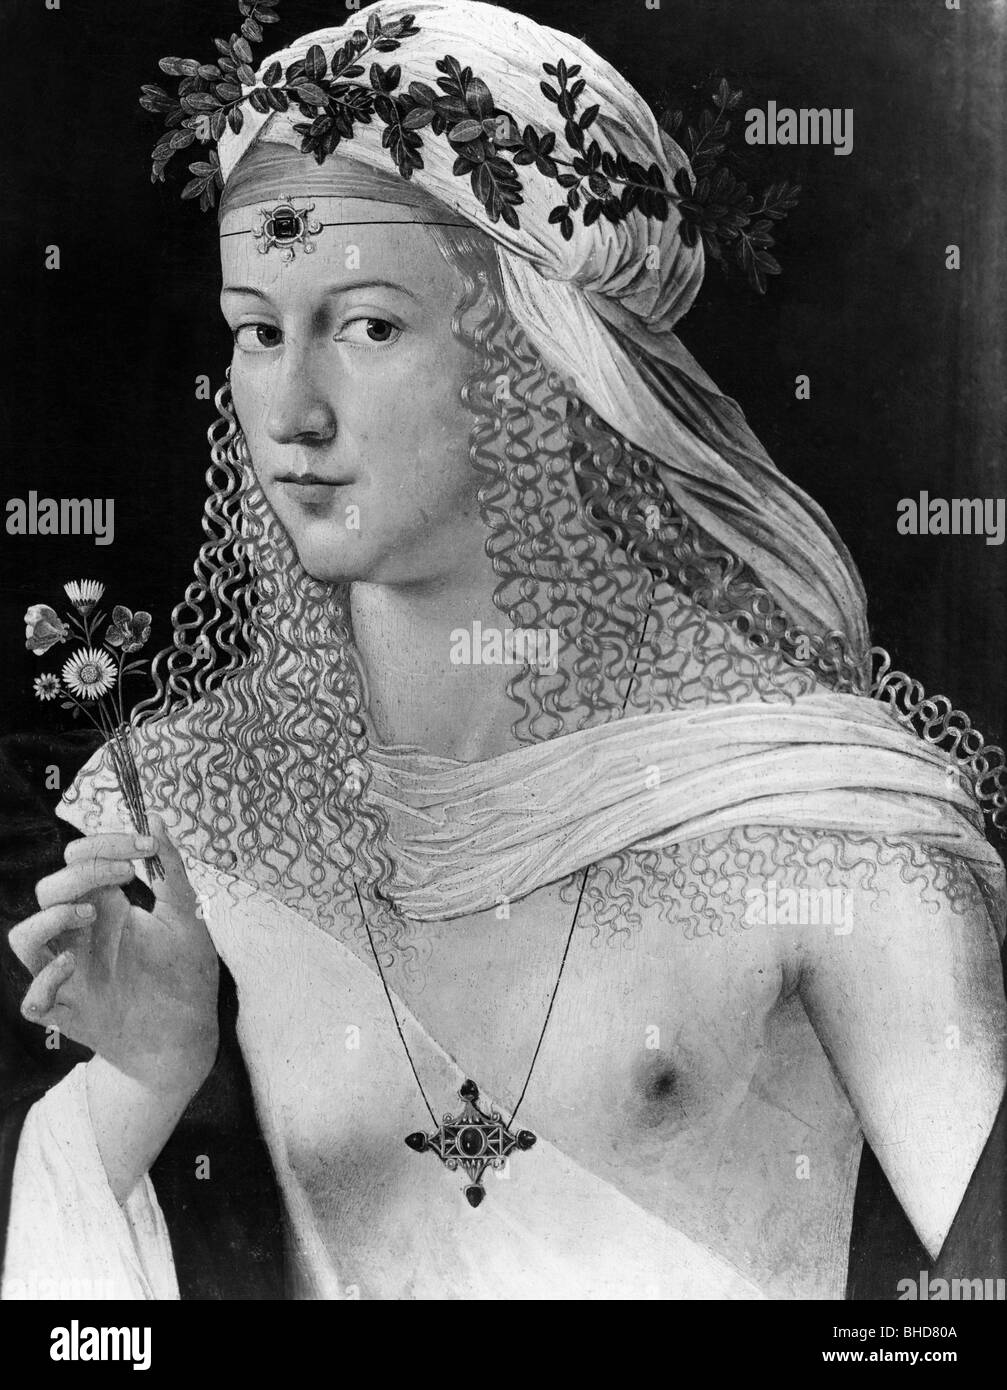 Borgia, Lucrezia, 18.4.1480 - 24.6.1519, daughter of Pope Alexander VI,  half length, wrongly attributed image